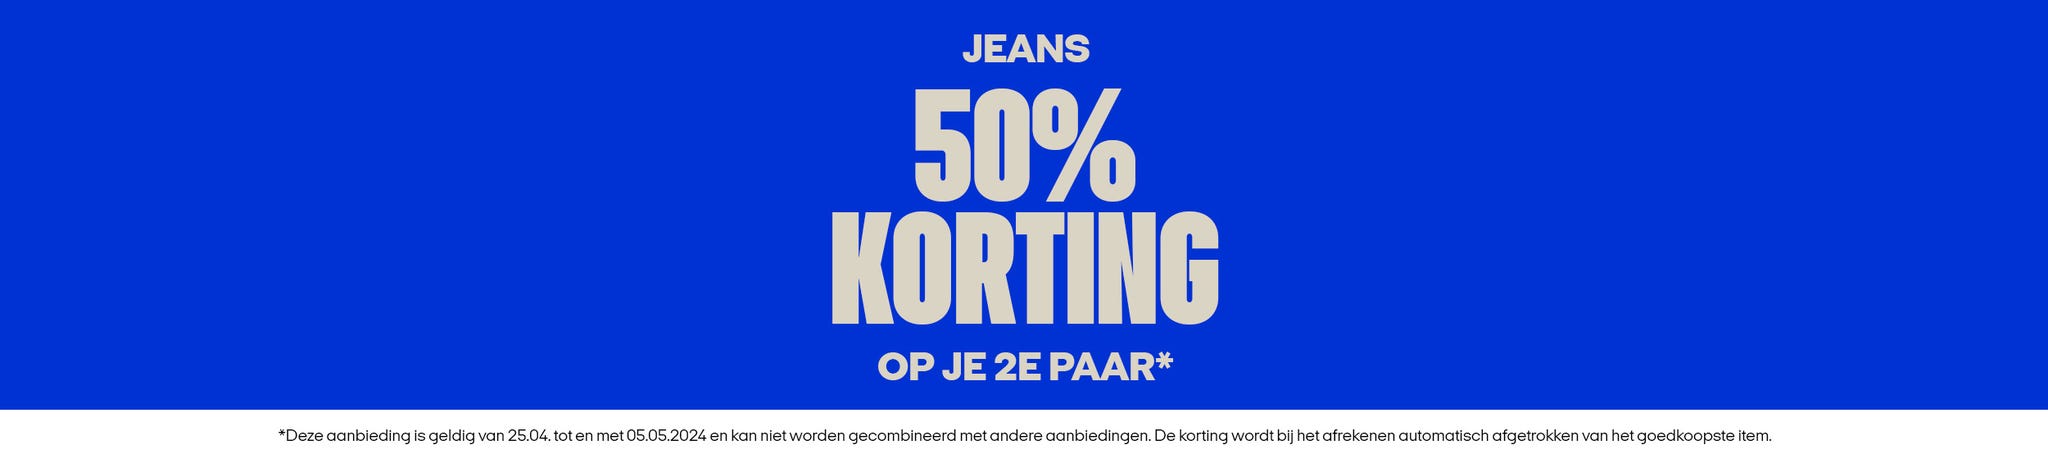 jjxx-2nd-jeans-dayz11-catb-row1-box1-nl-nl.jpg